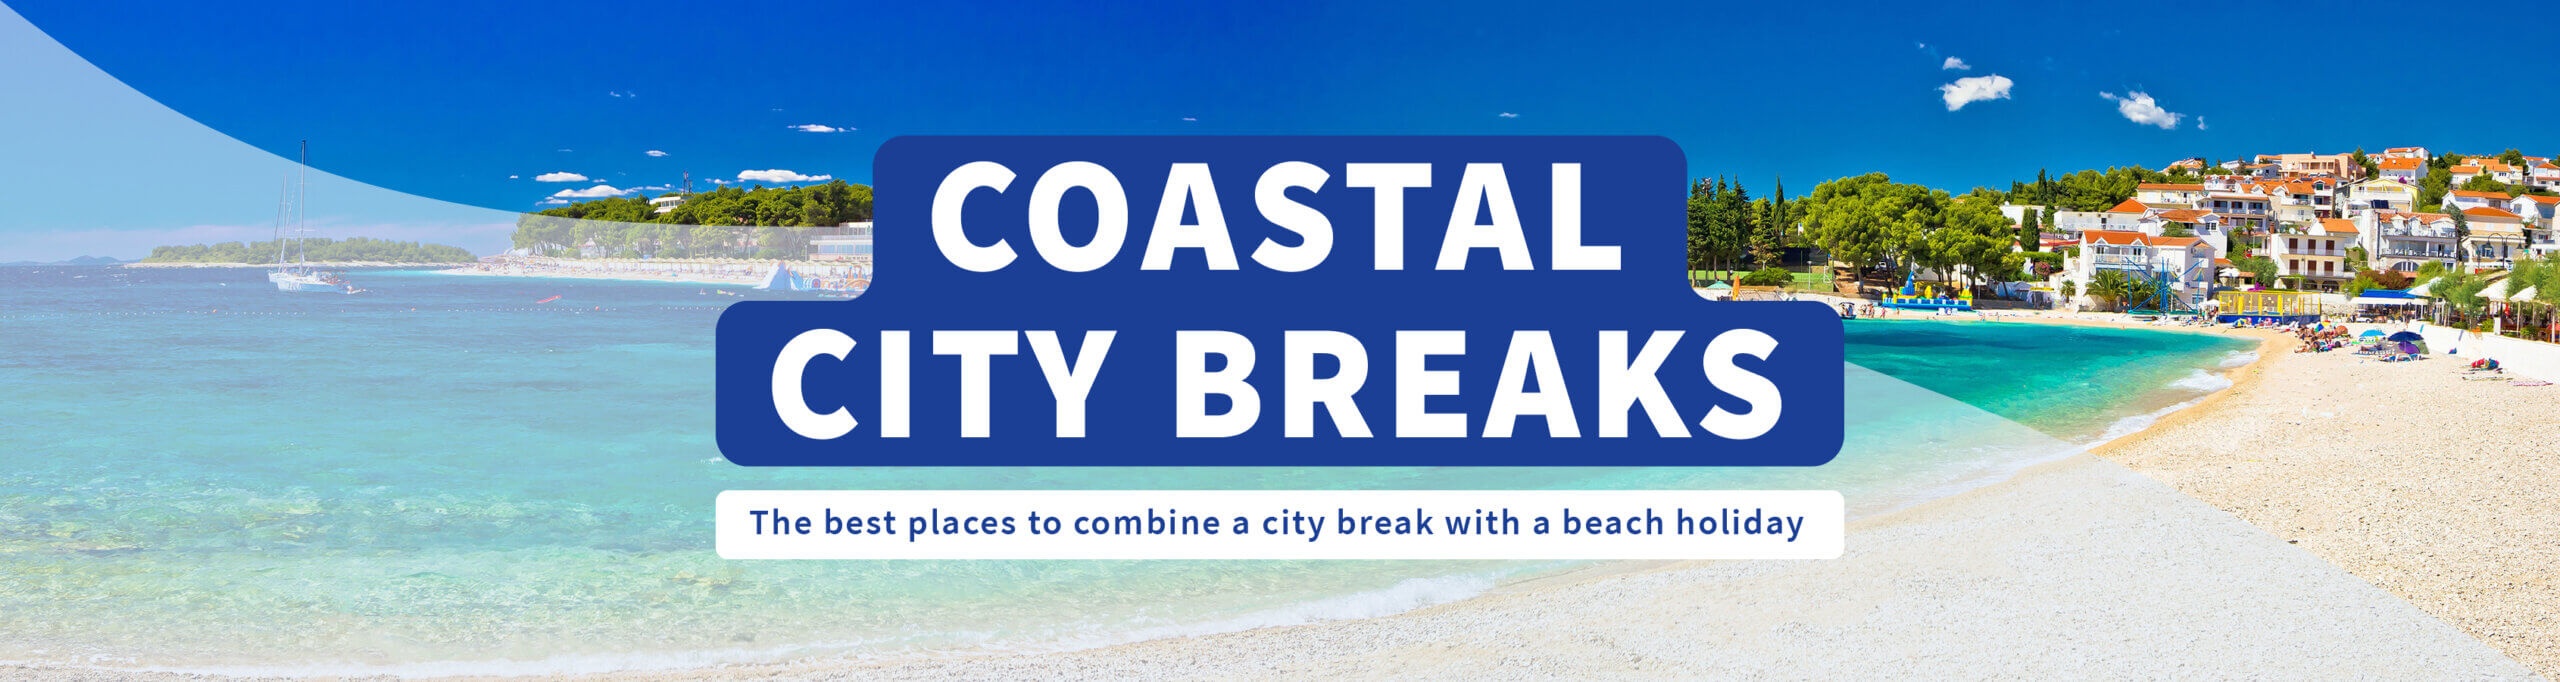 Coastal City Breaks header